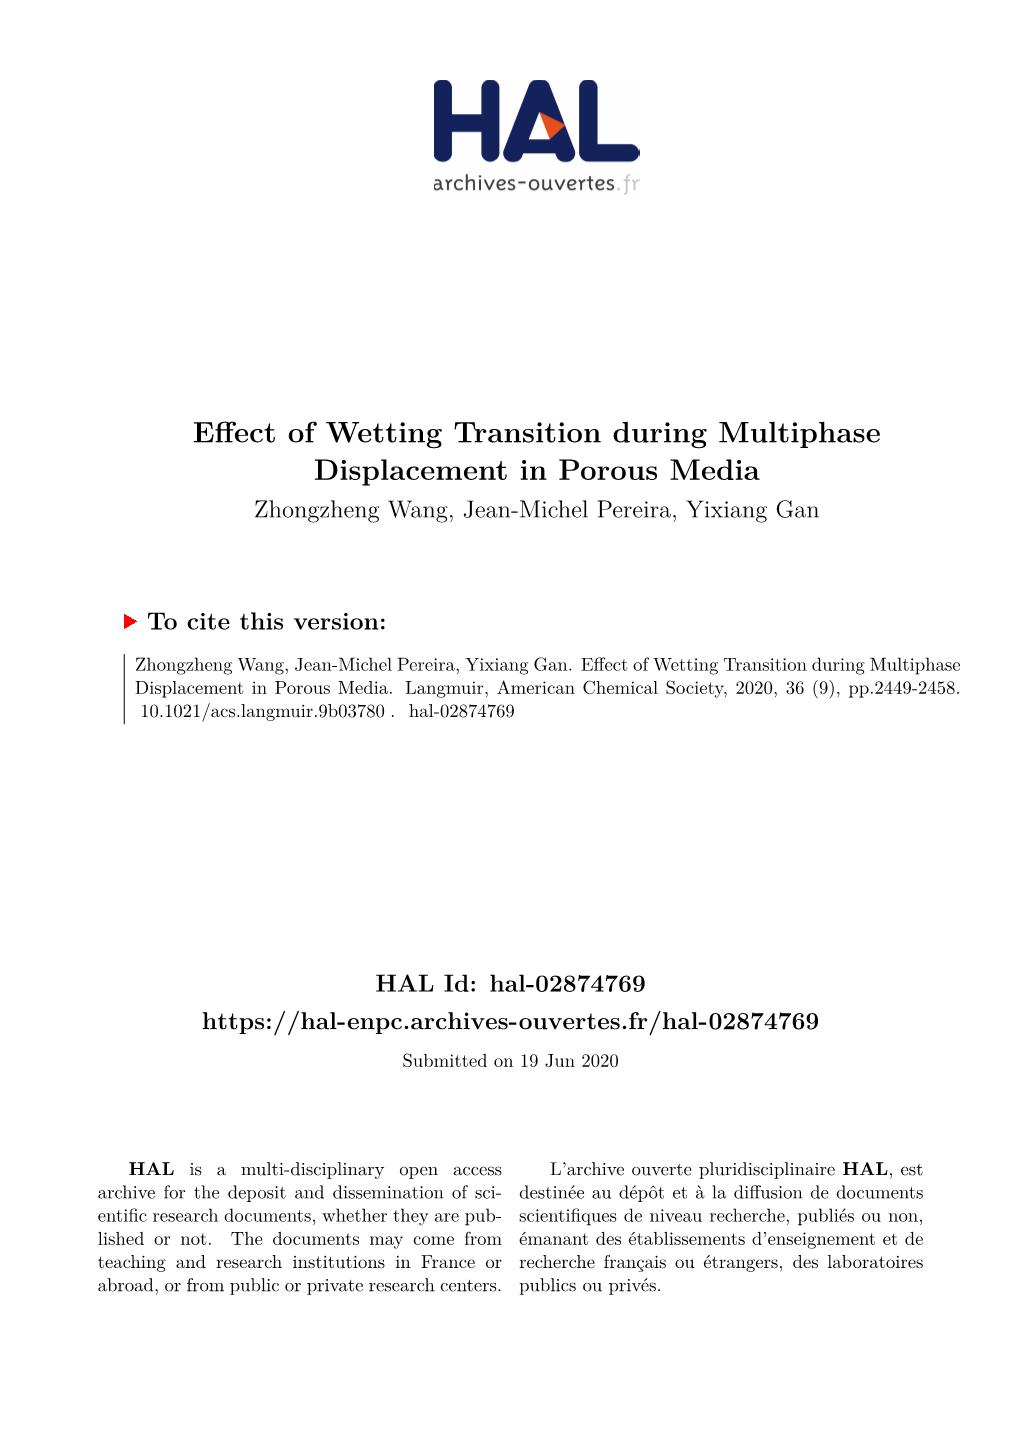 Effect of Wetting Transition During Multiphase Displacement in Porous Media Zhongzheng Wang, Jean-Michel Pereira, Yixiang Gan